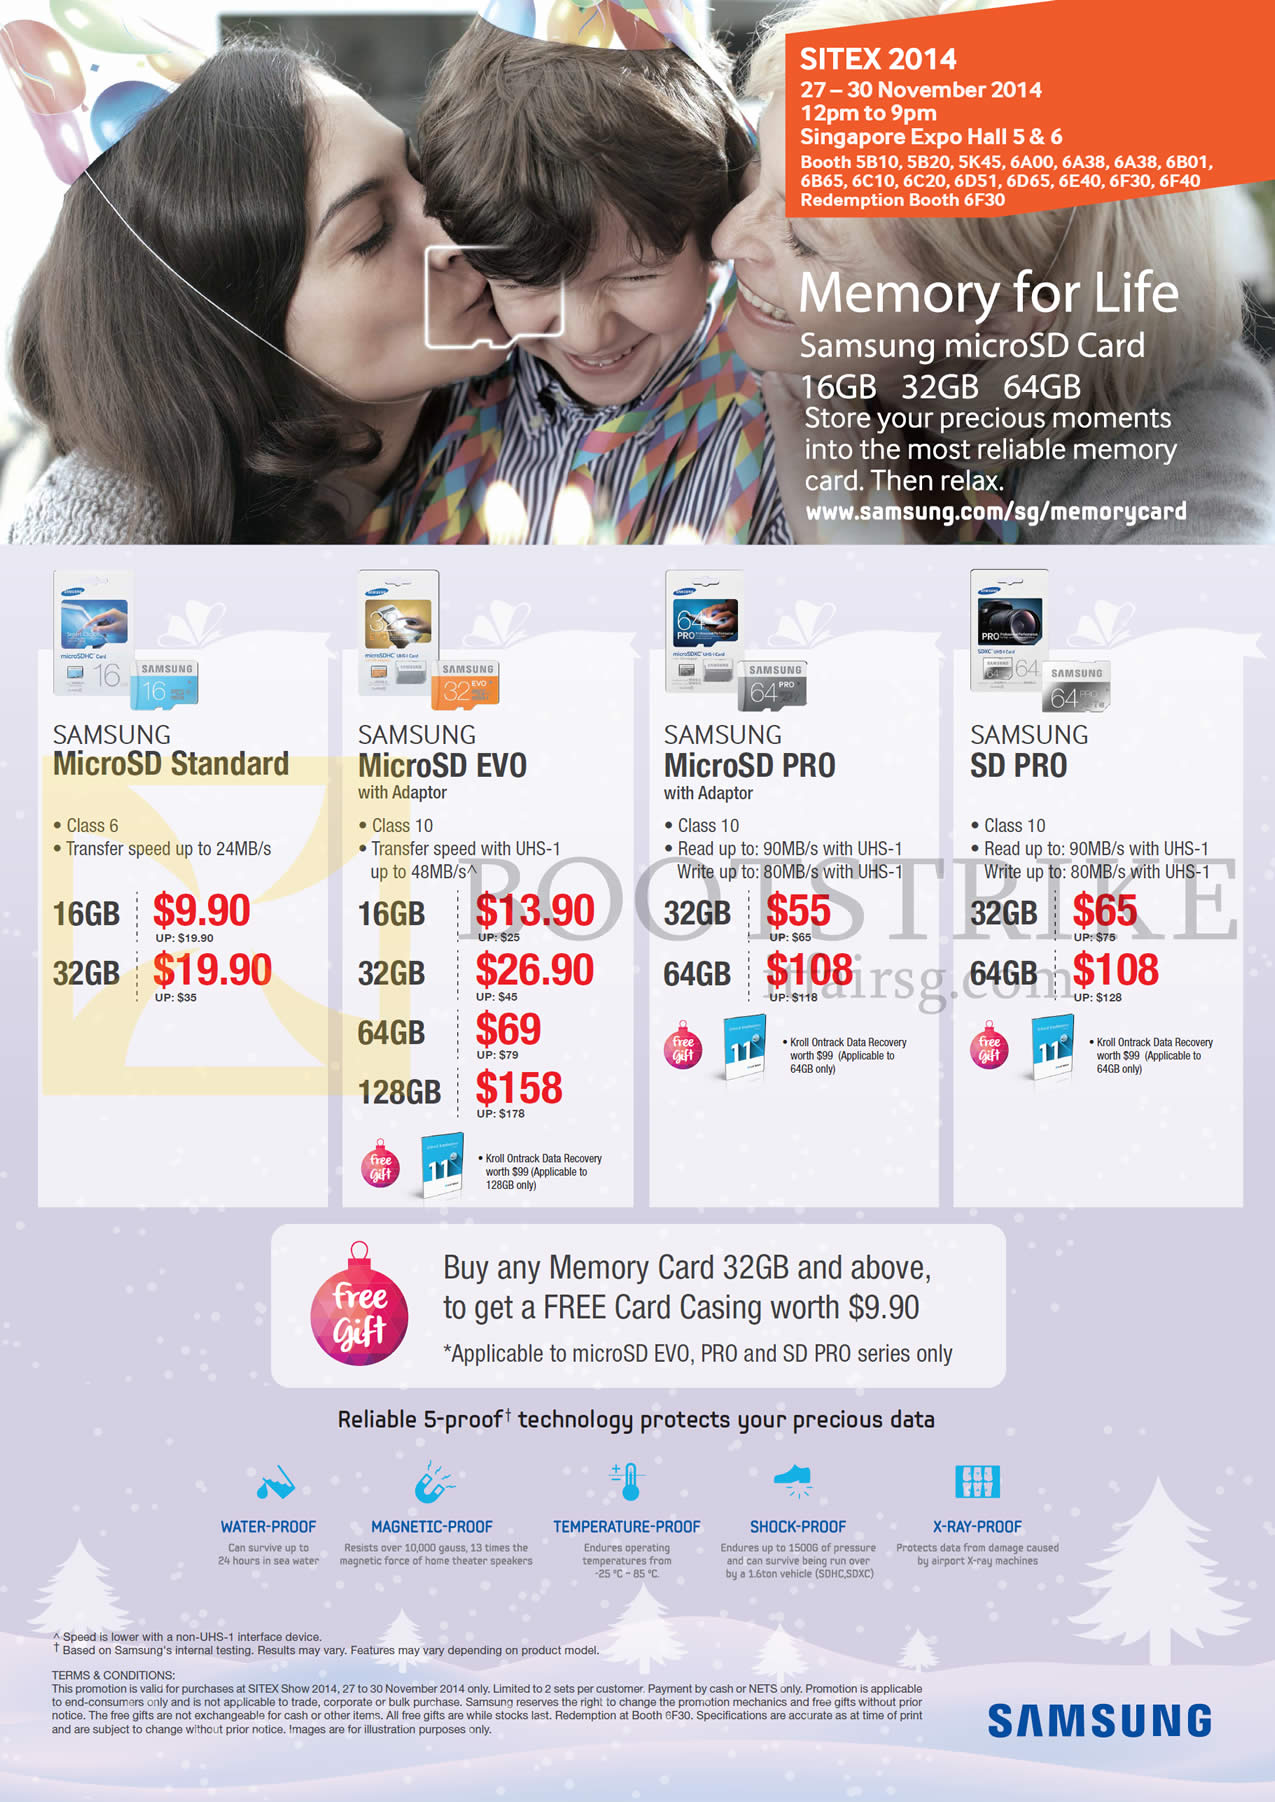 SITEX 2014 price list image brochure of Samsung Flash Memory, MicroSD Standard, EVO, PRO, SD PRO